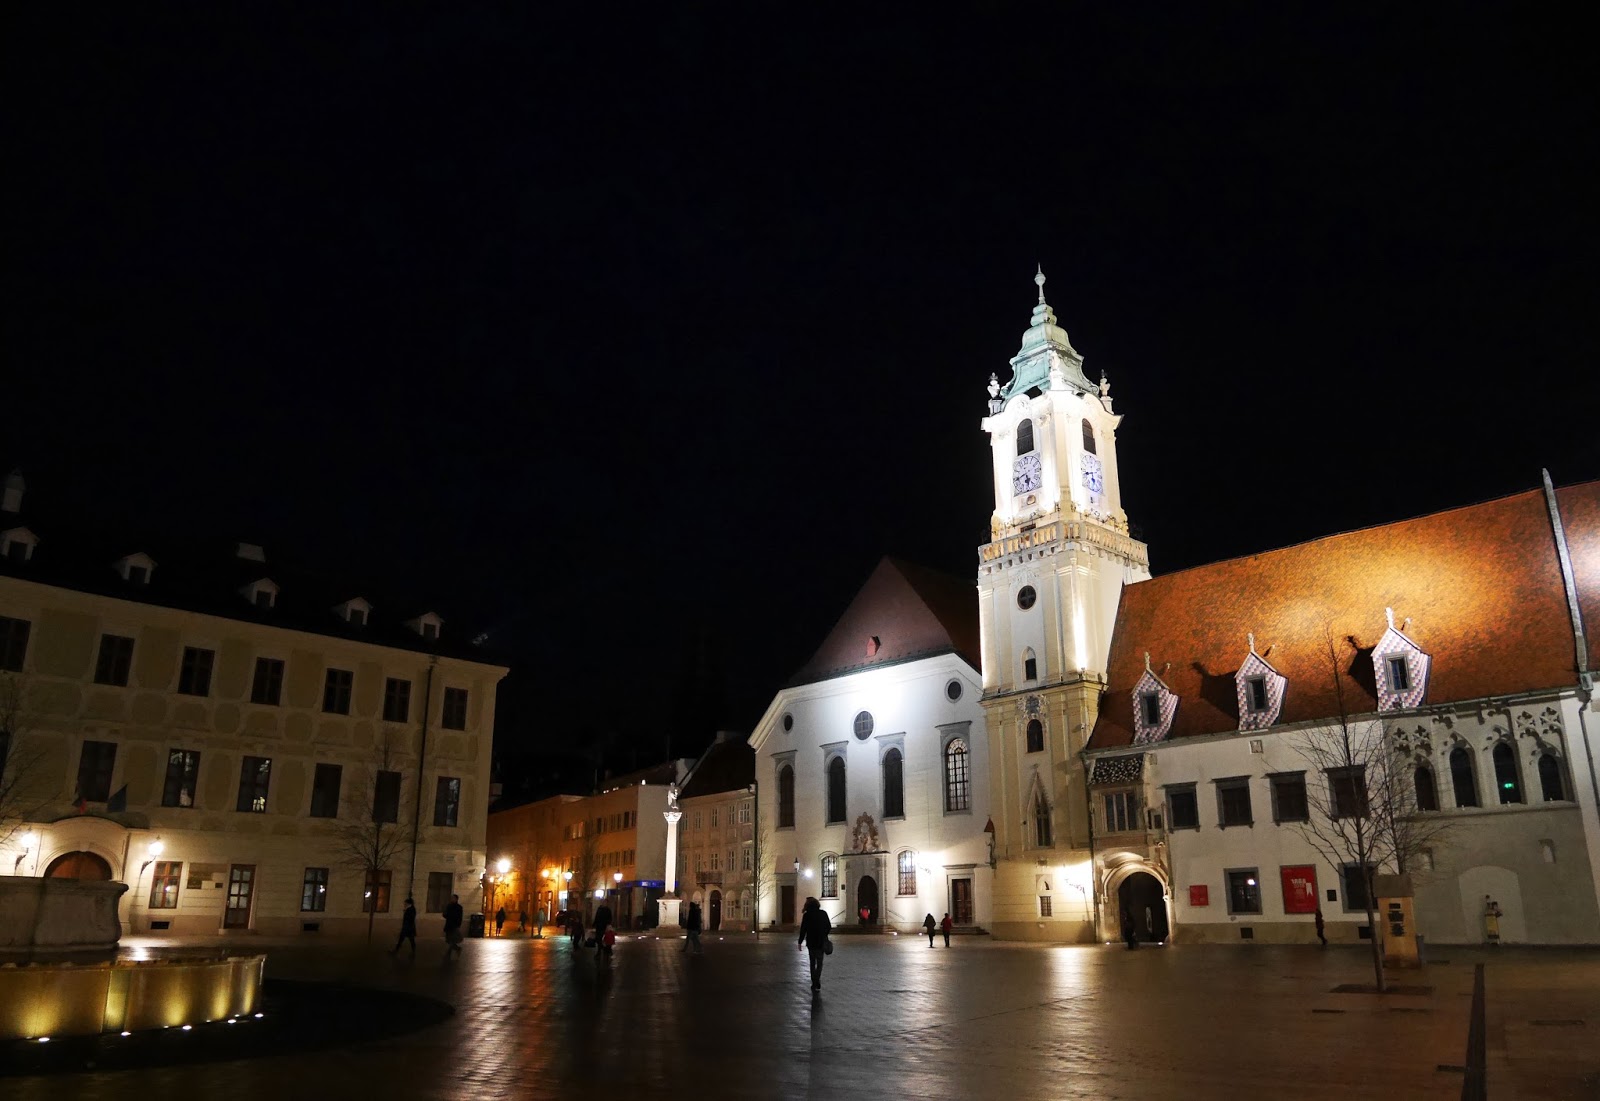 Bratislava's Old Town Hall at night